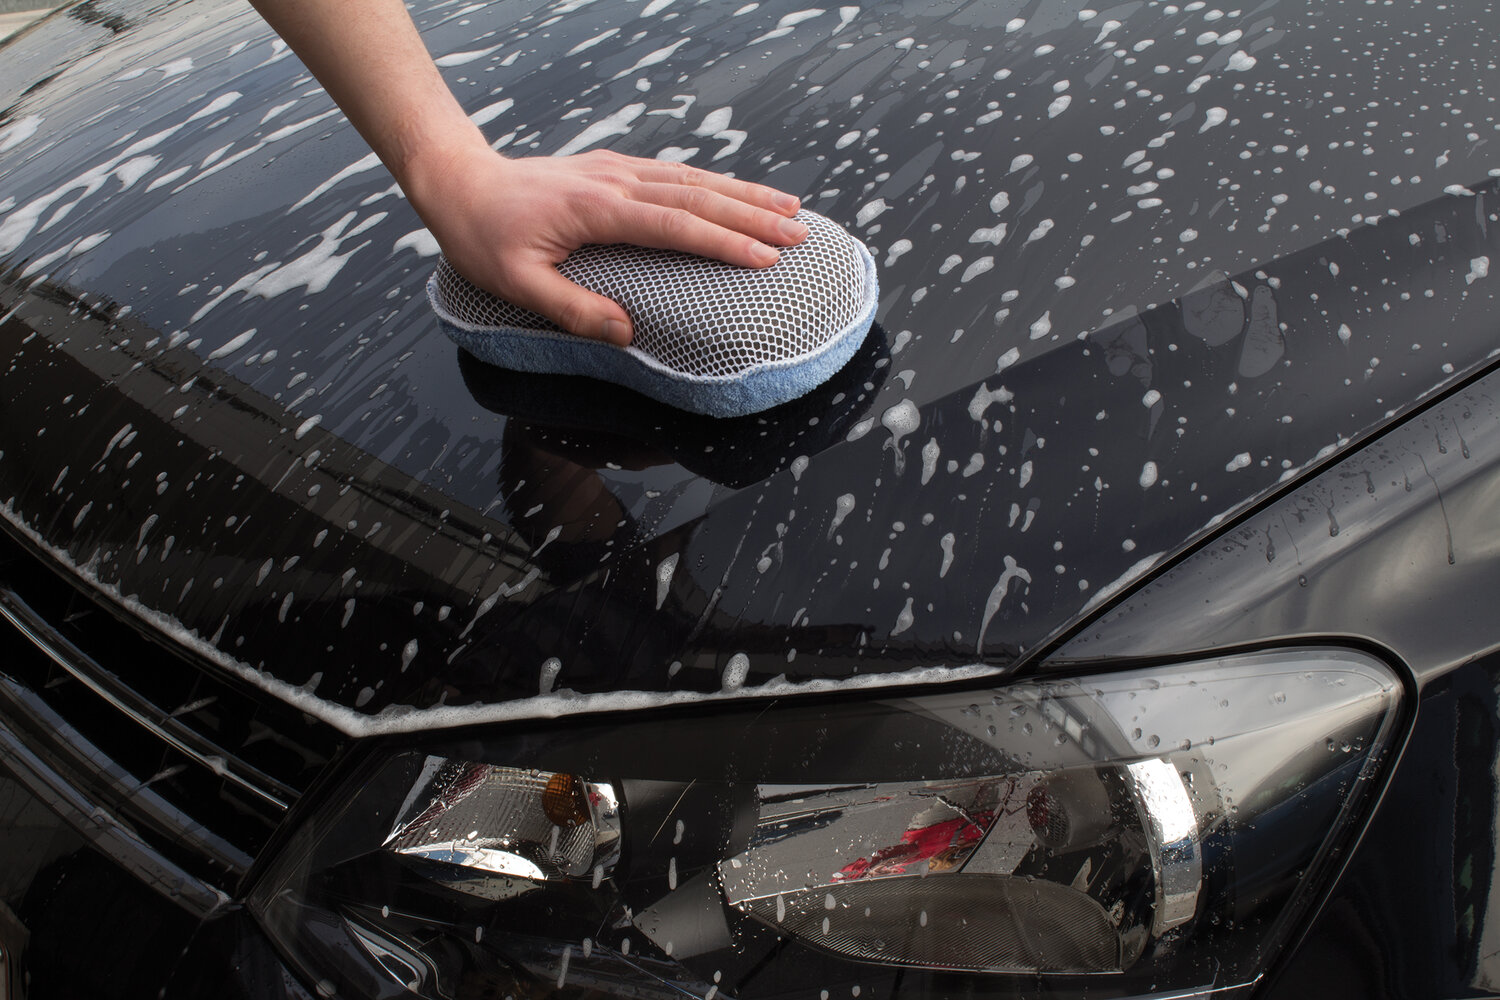 Car washing microfiber sponge